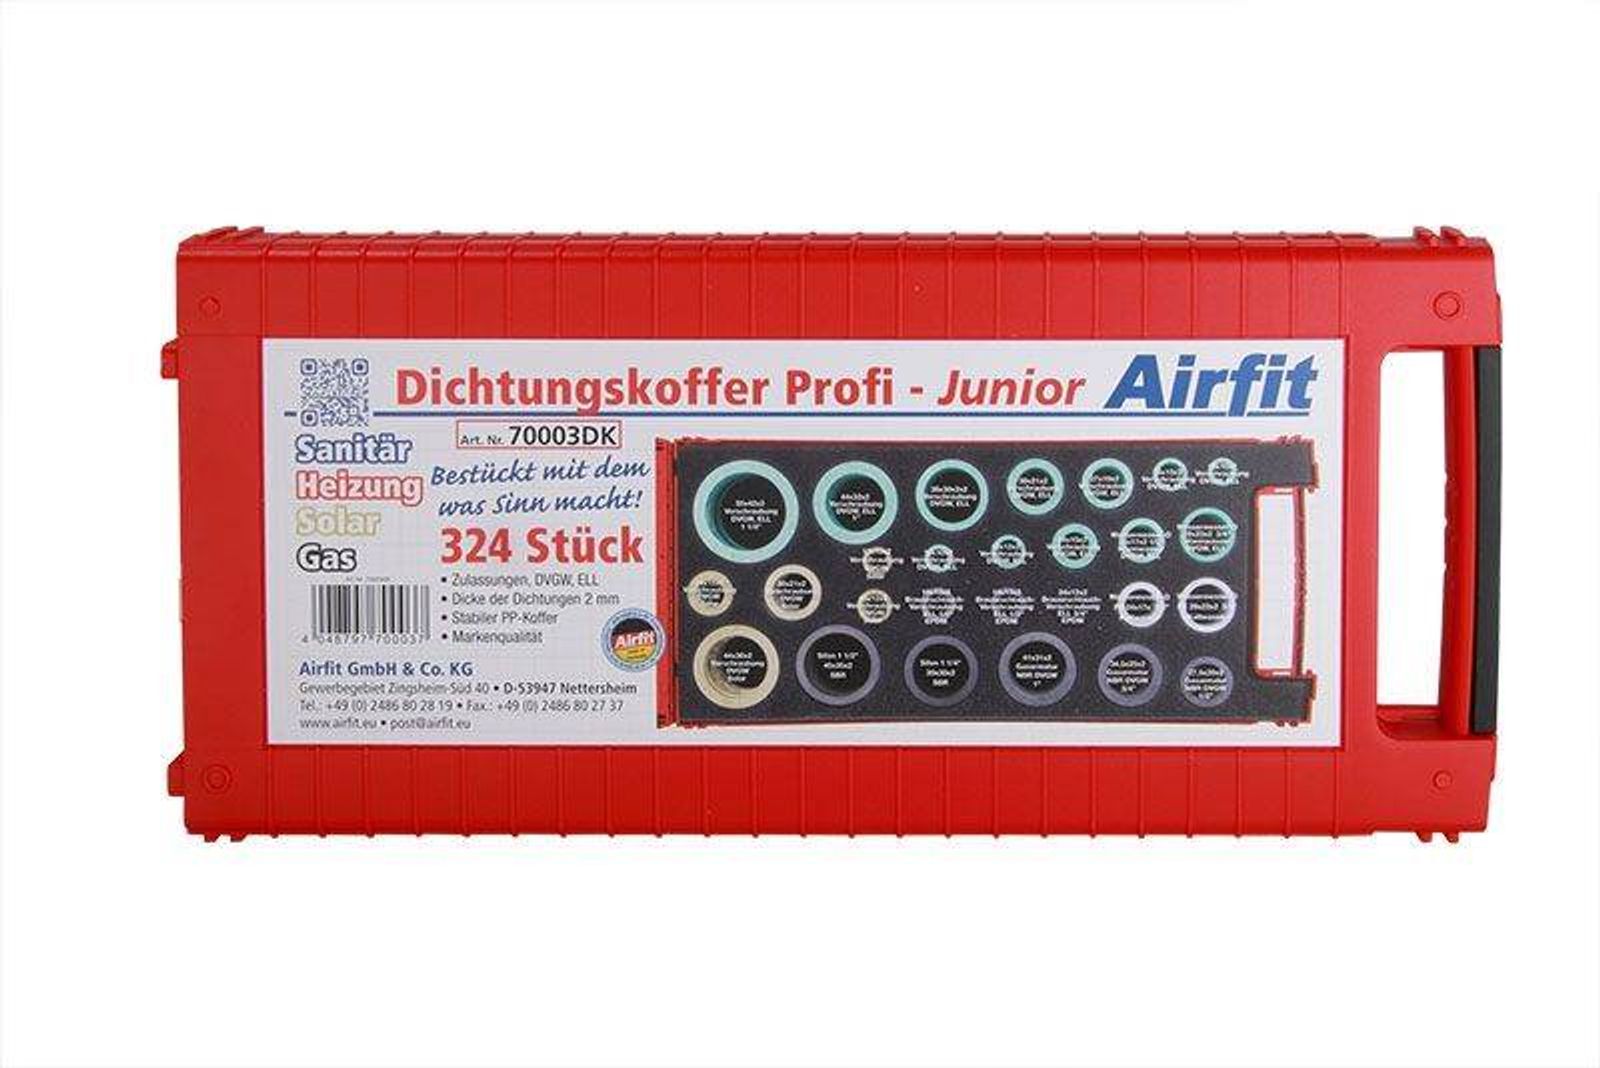 Airfit Dichtungskoffer Profi Junior Sanitär, Heizung, Solar, Gas - 324 Teile